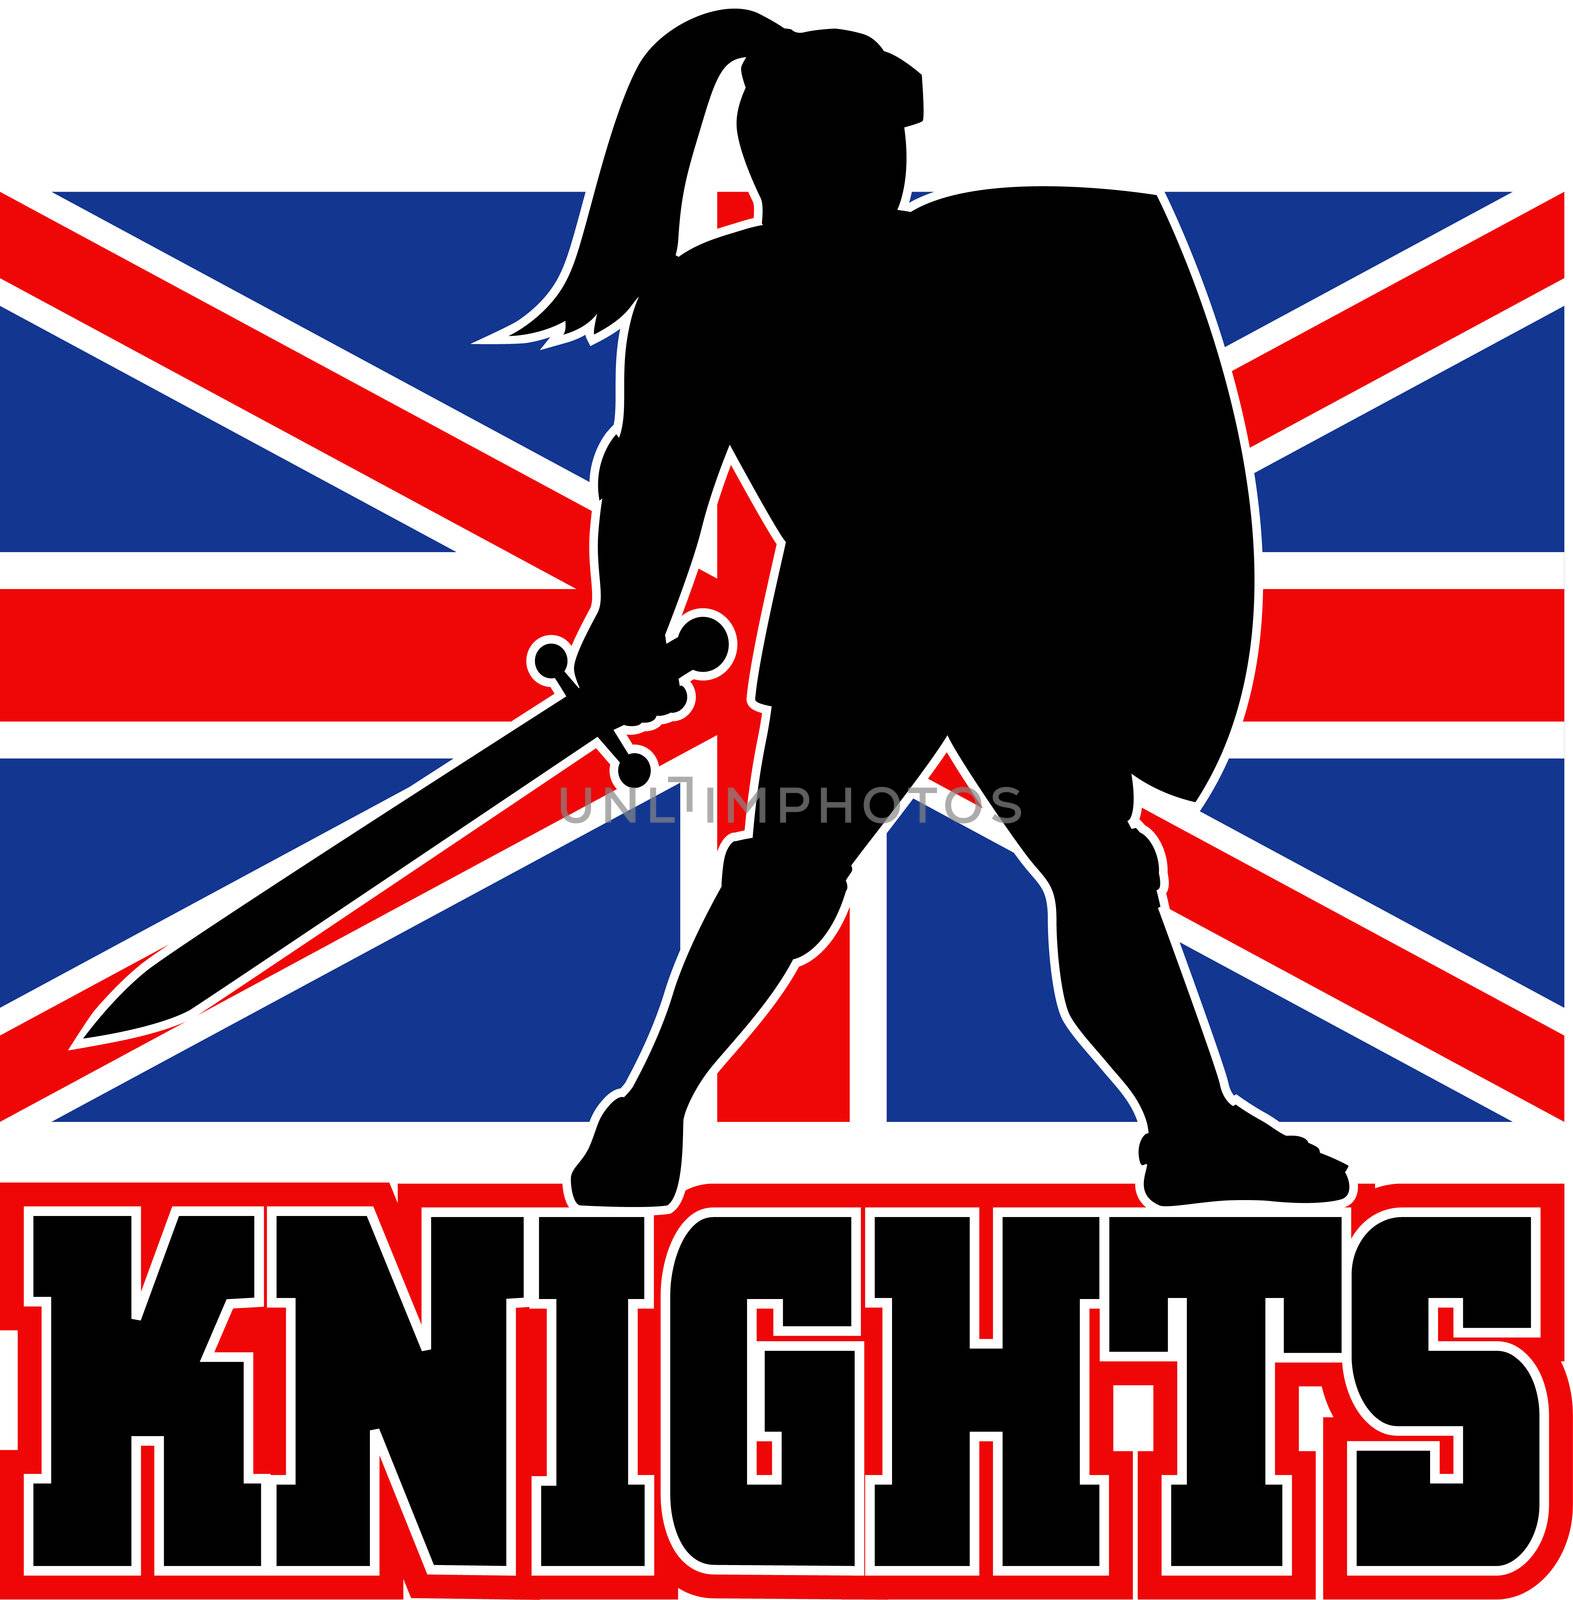 Knight with sword shield GB British Flag by patrimonio